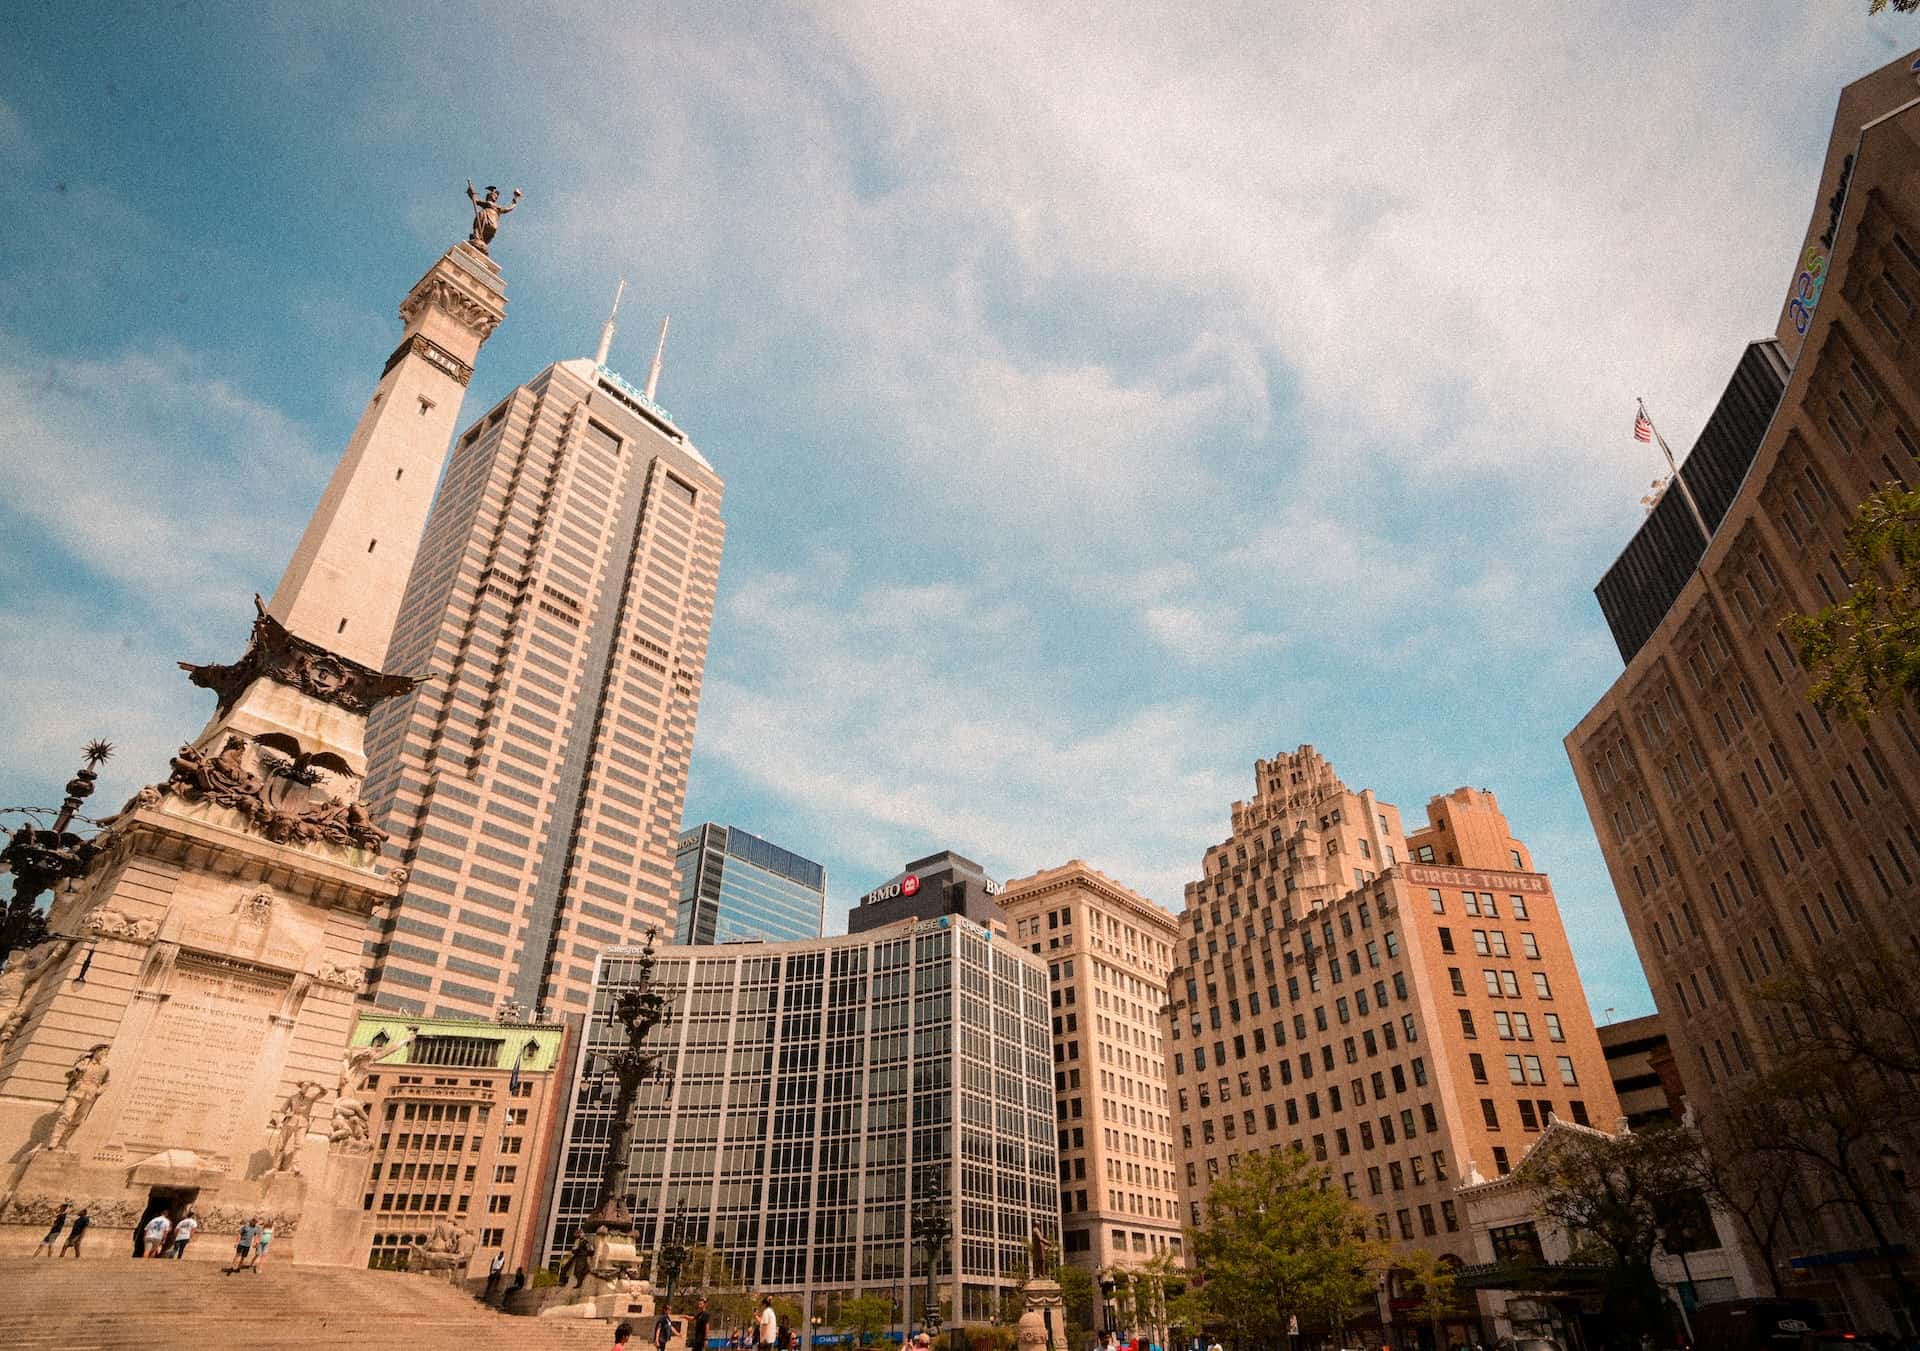 Indianapolis, Indiana